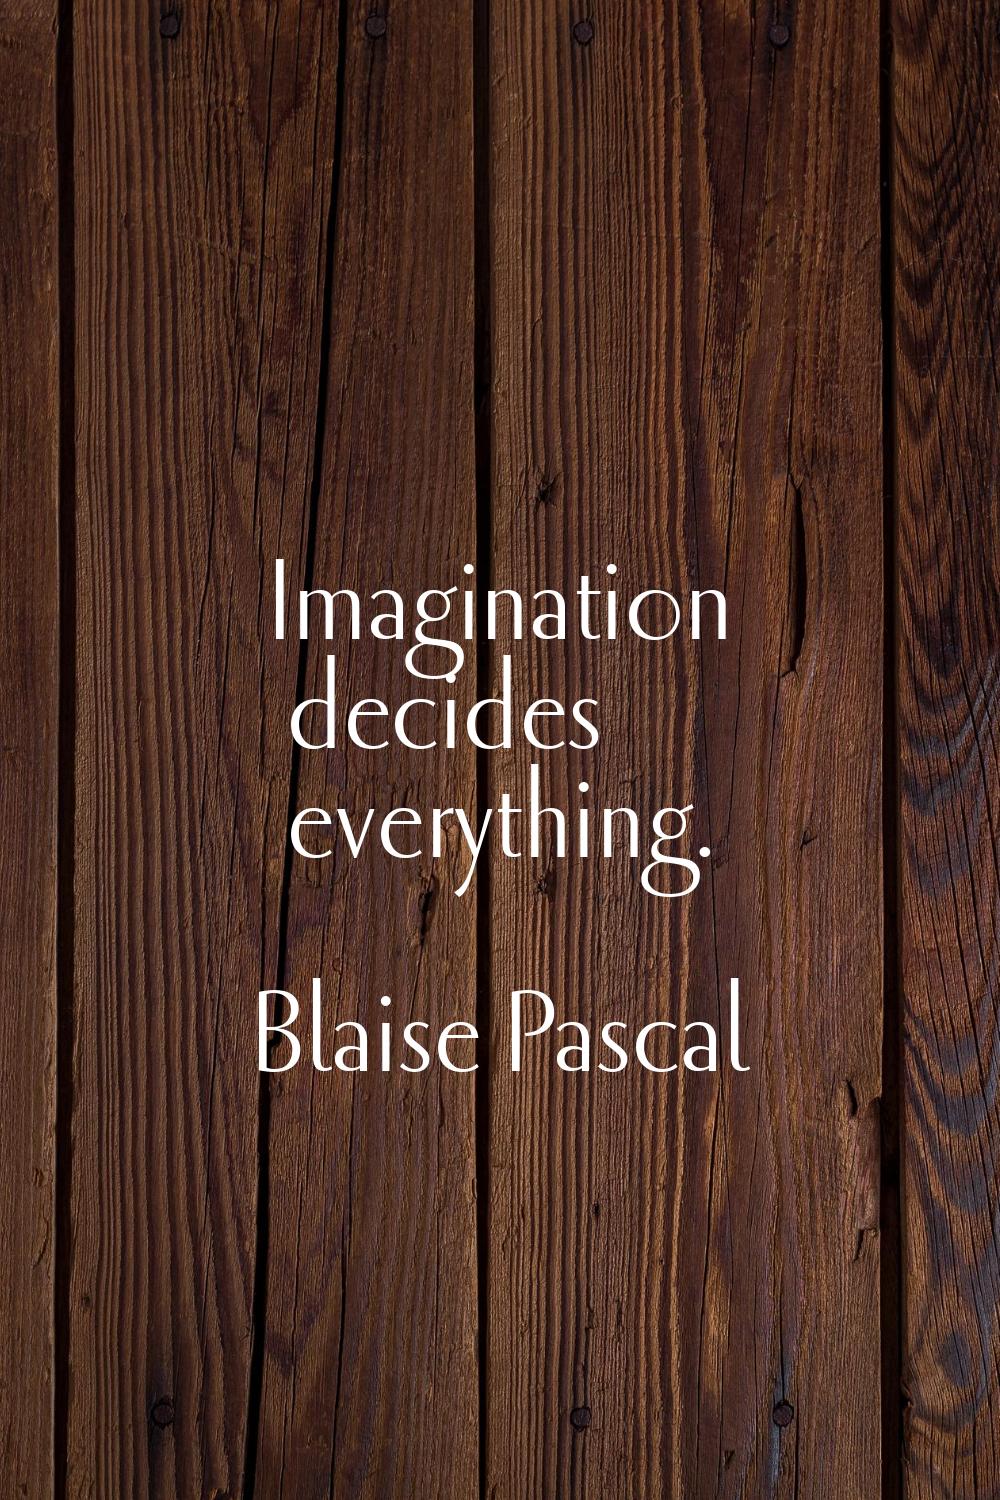 Imagination decides everything.